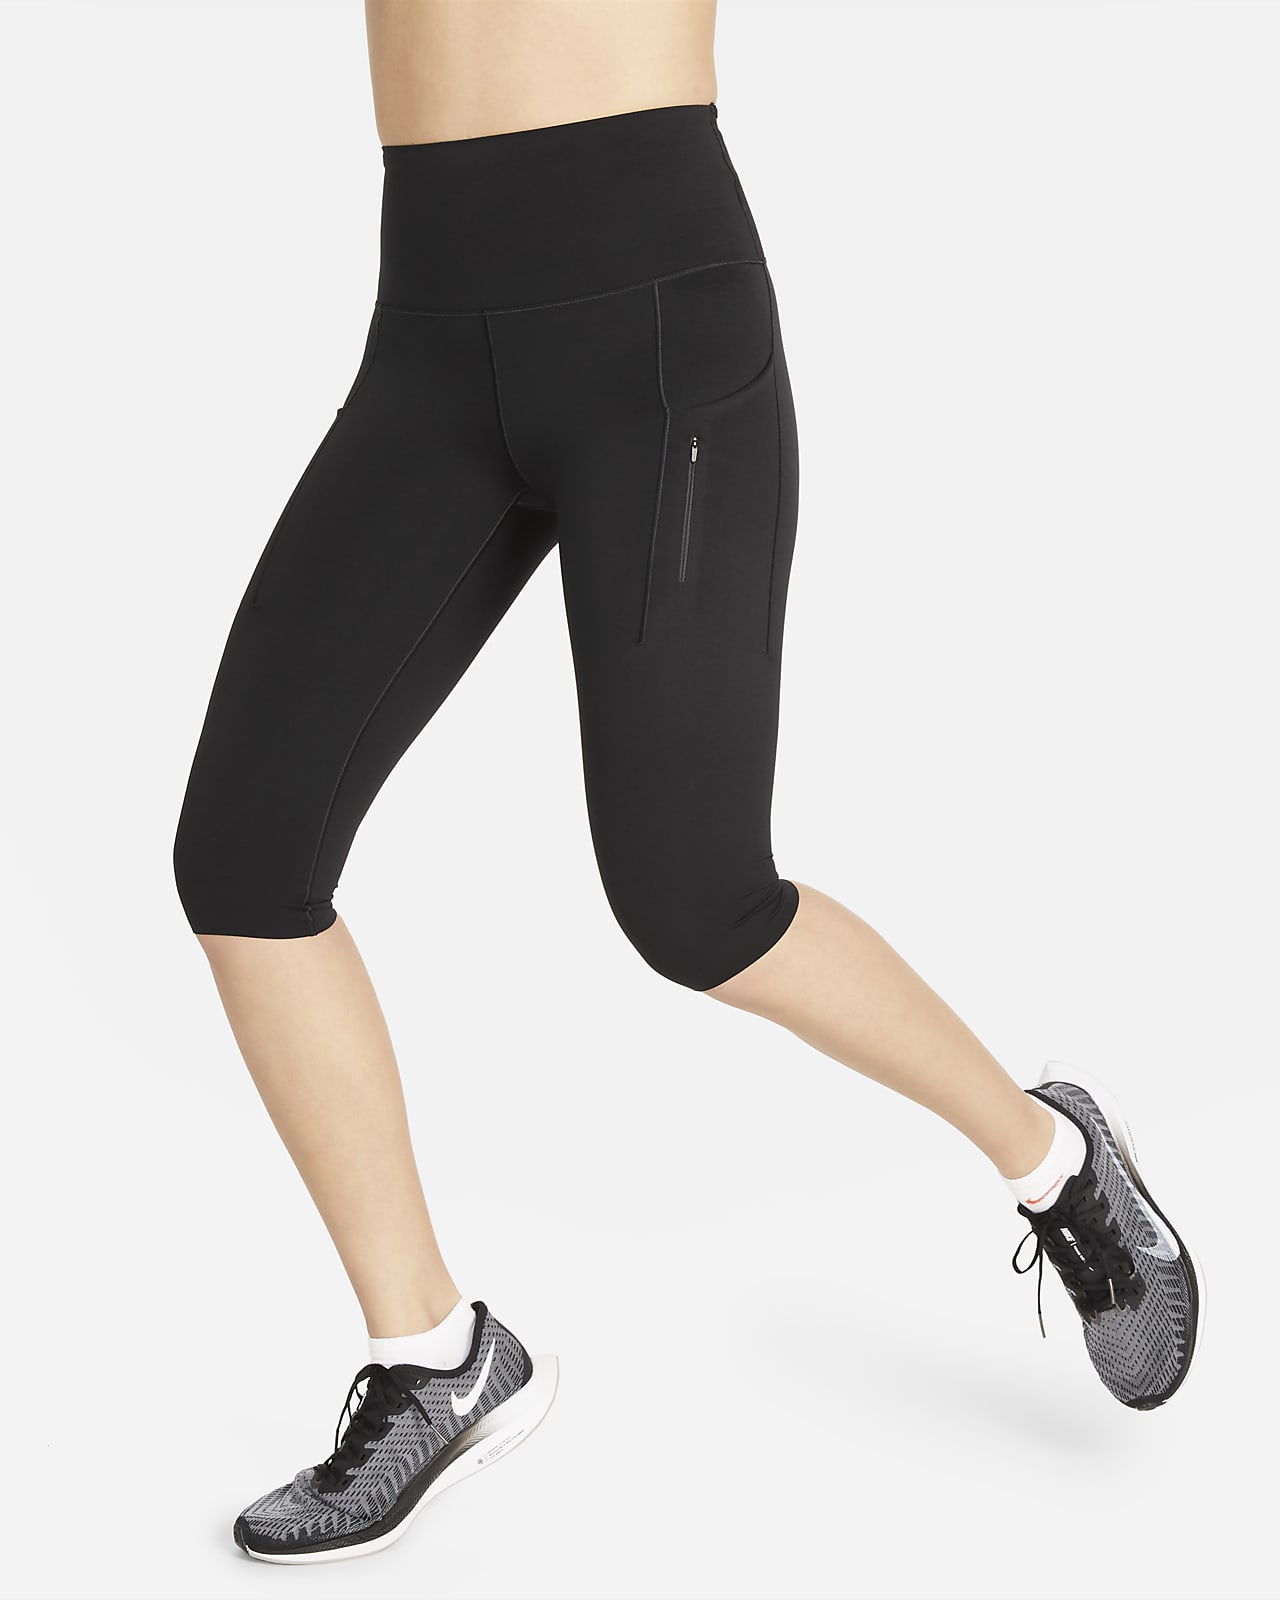 SERHOM Yoga Pants, High Waist Tummy Control Workout Women Yoga Leggings  with Pockets, Black Capri, XXL price in Saudi Arabia | Amazon Saudi Arabia  | kanbkam